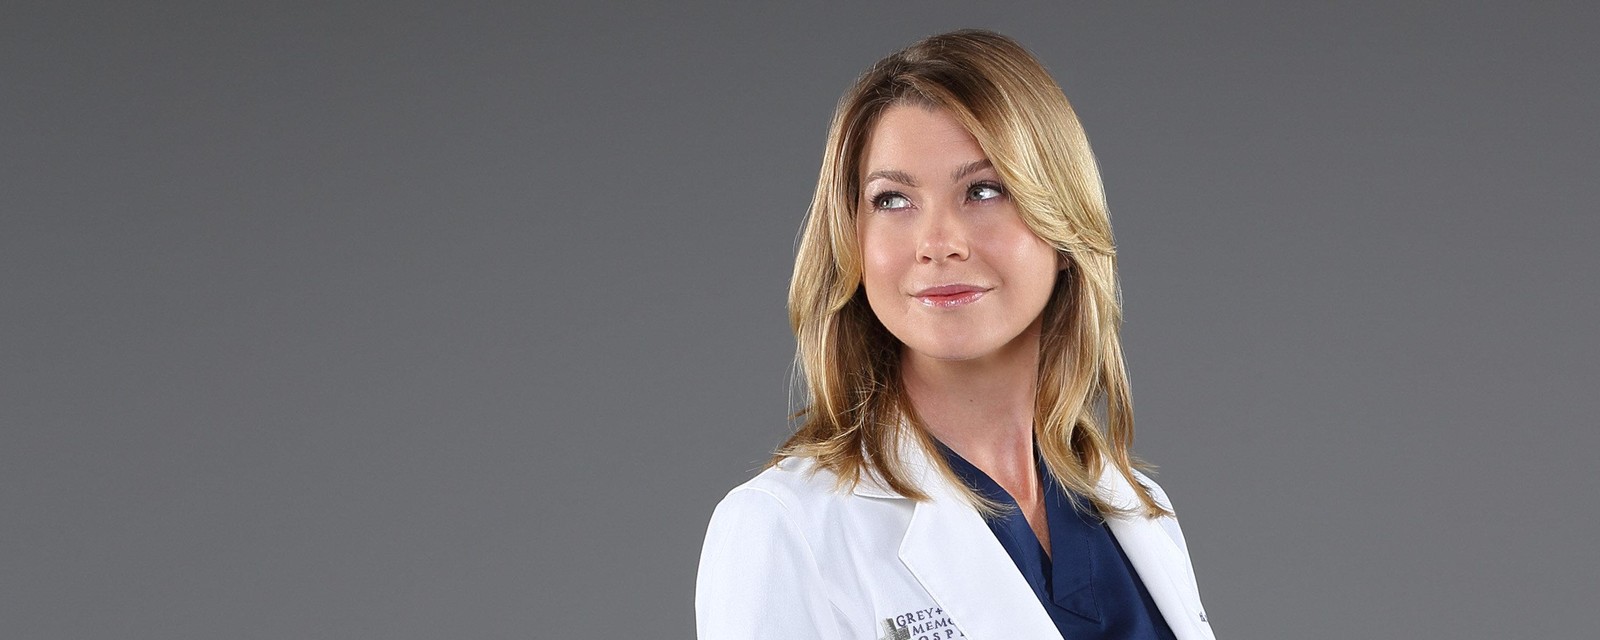 Character 101: Meredith Grey | Grey's Anatomy